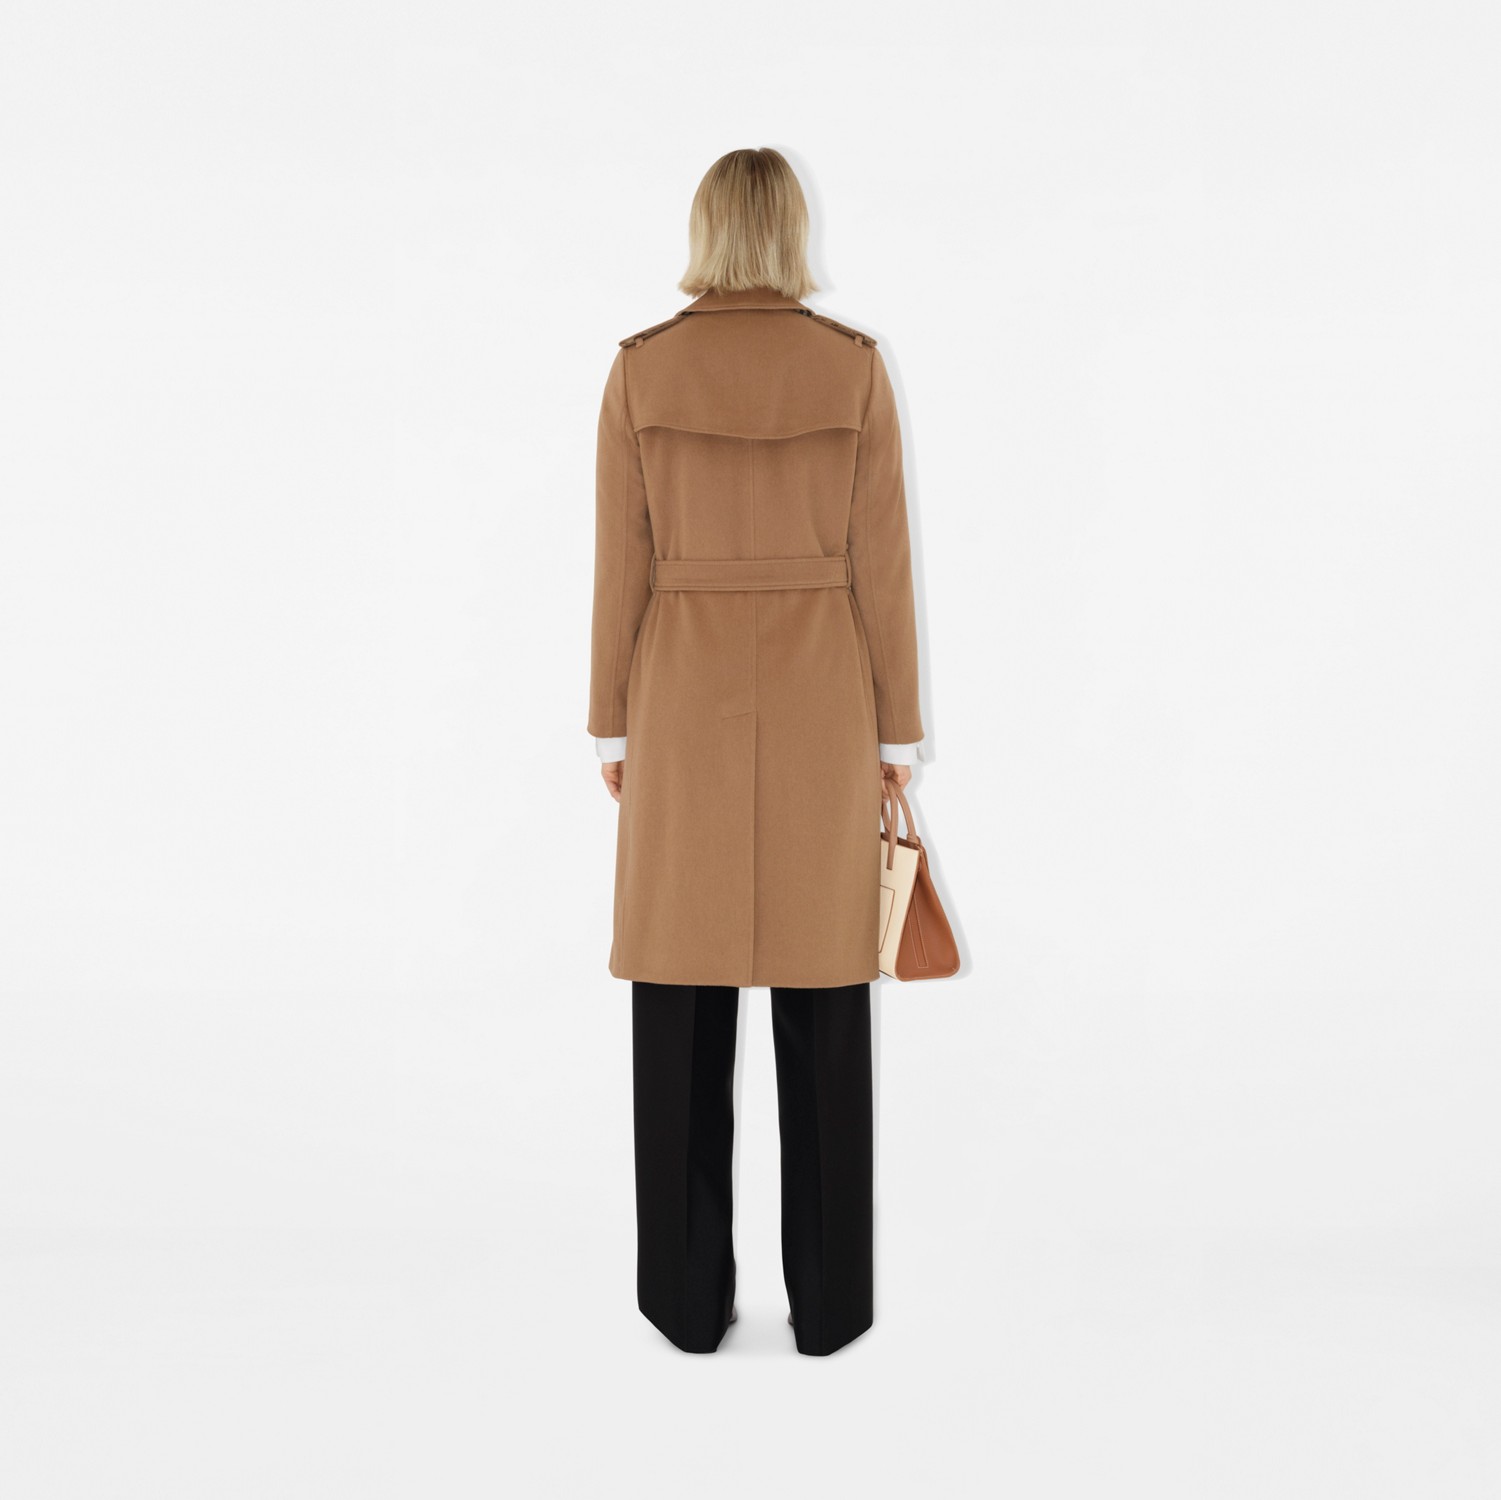 Kensington - Trench coat em mescla de cashmere longo